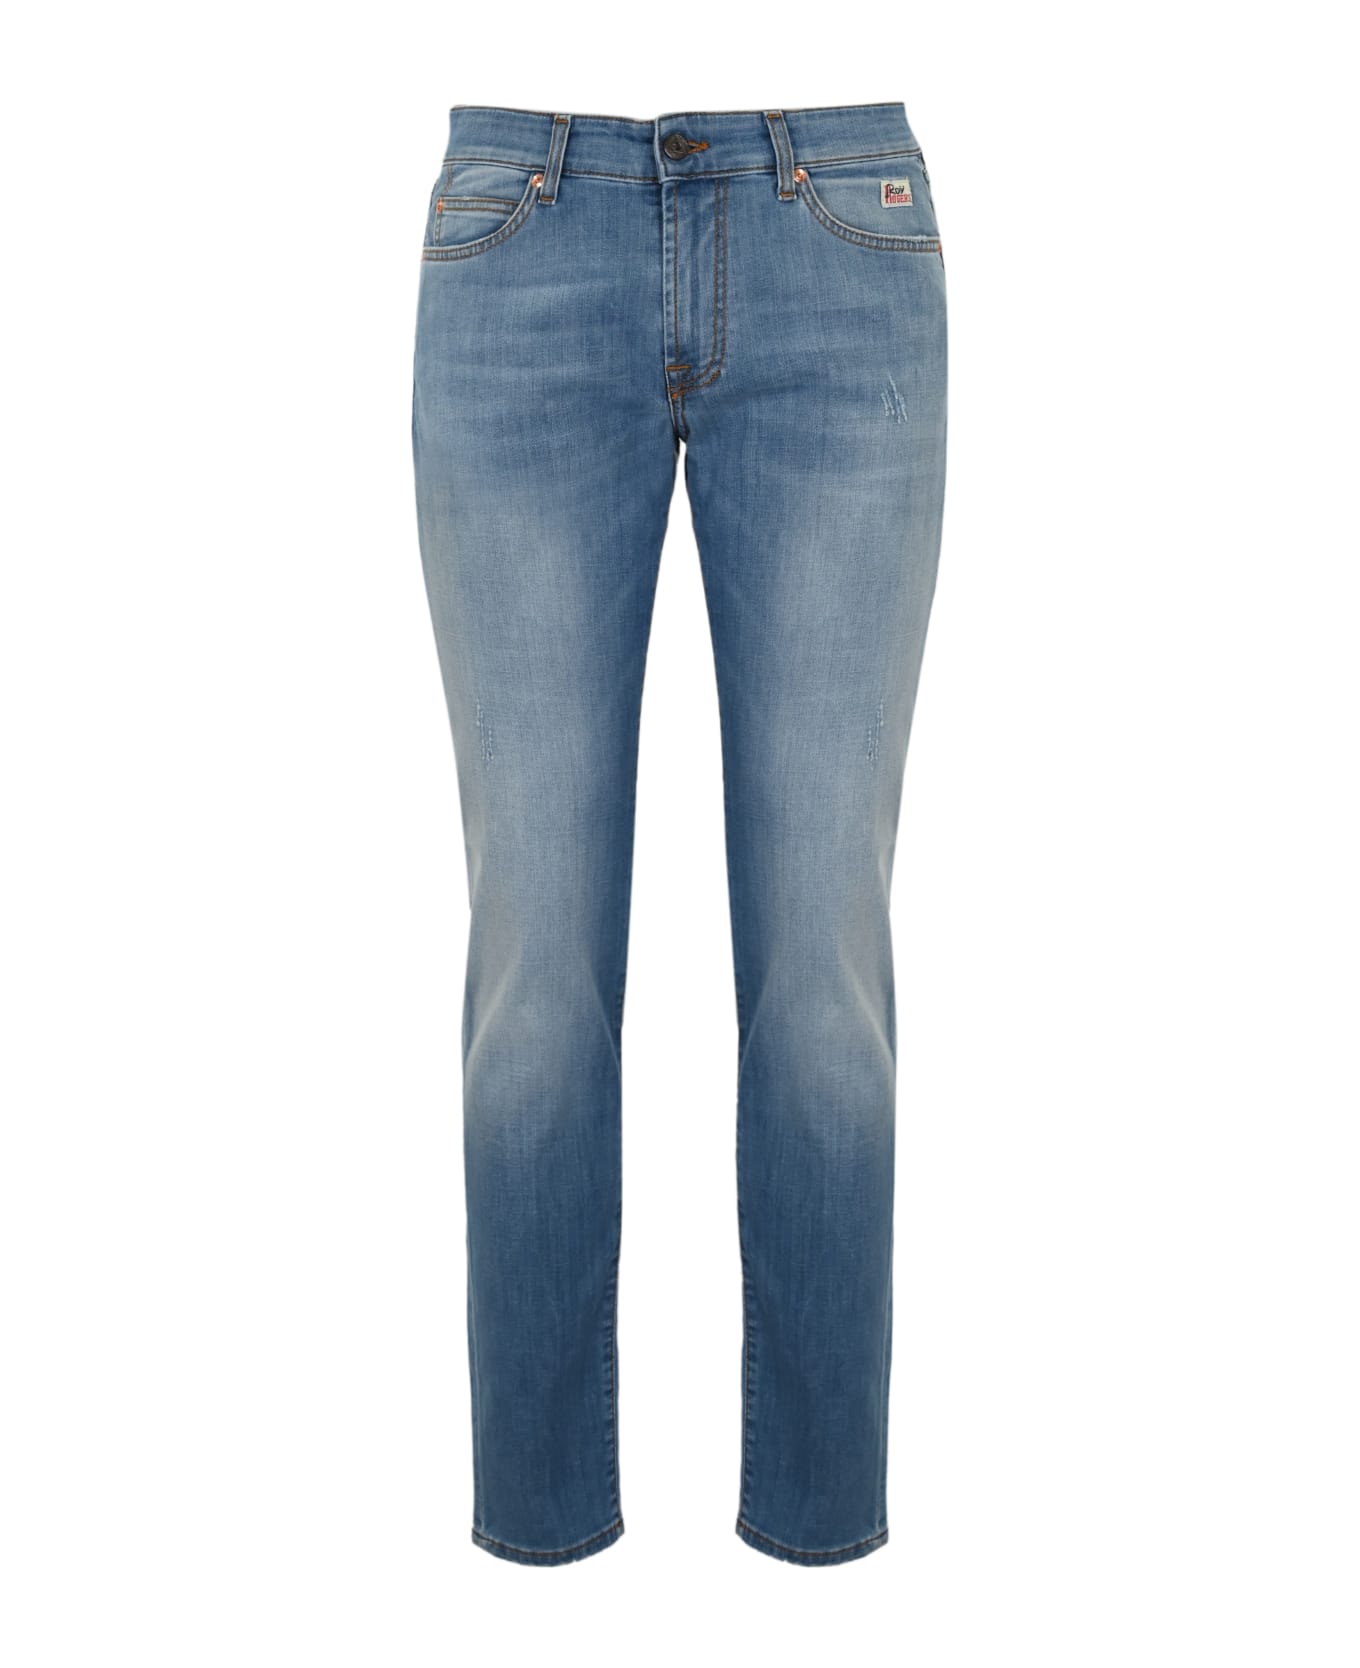 Roy Rogers 517 Js Jeans In Denim - Denim